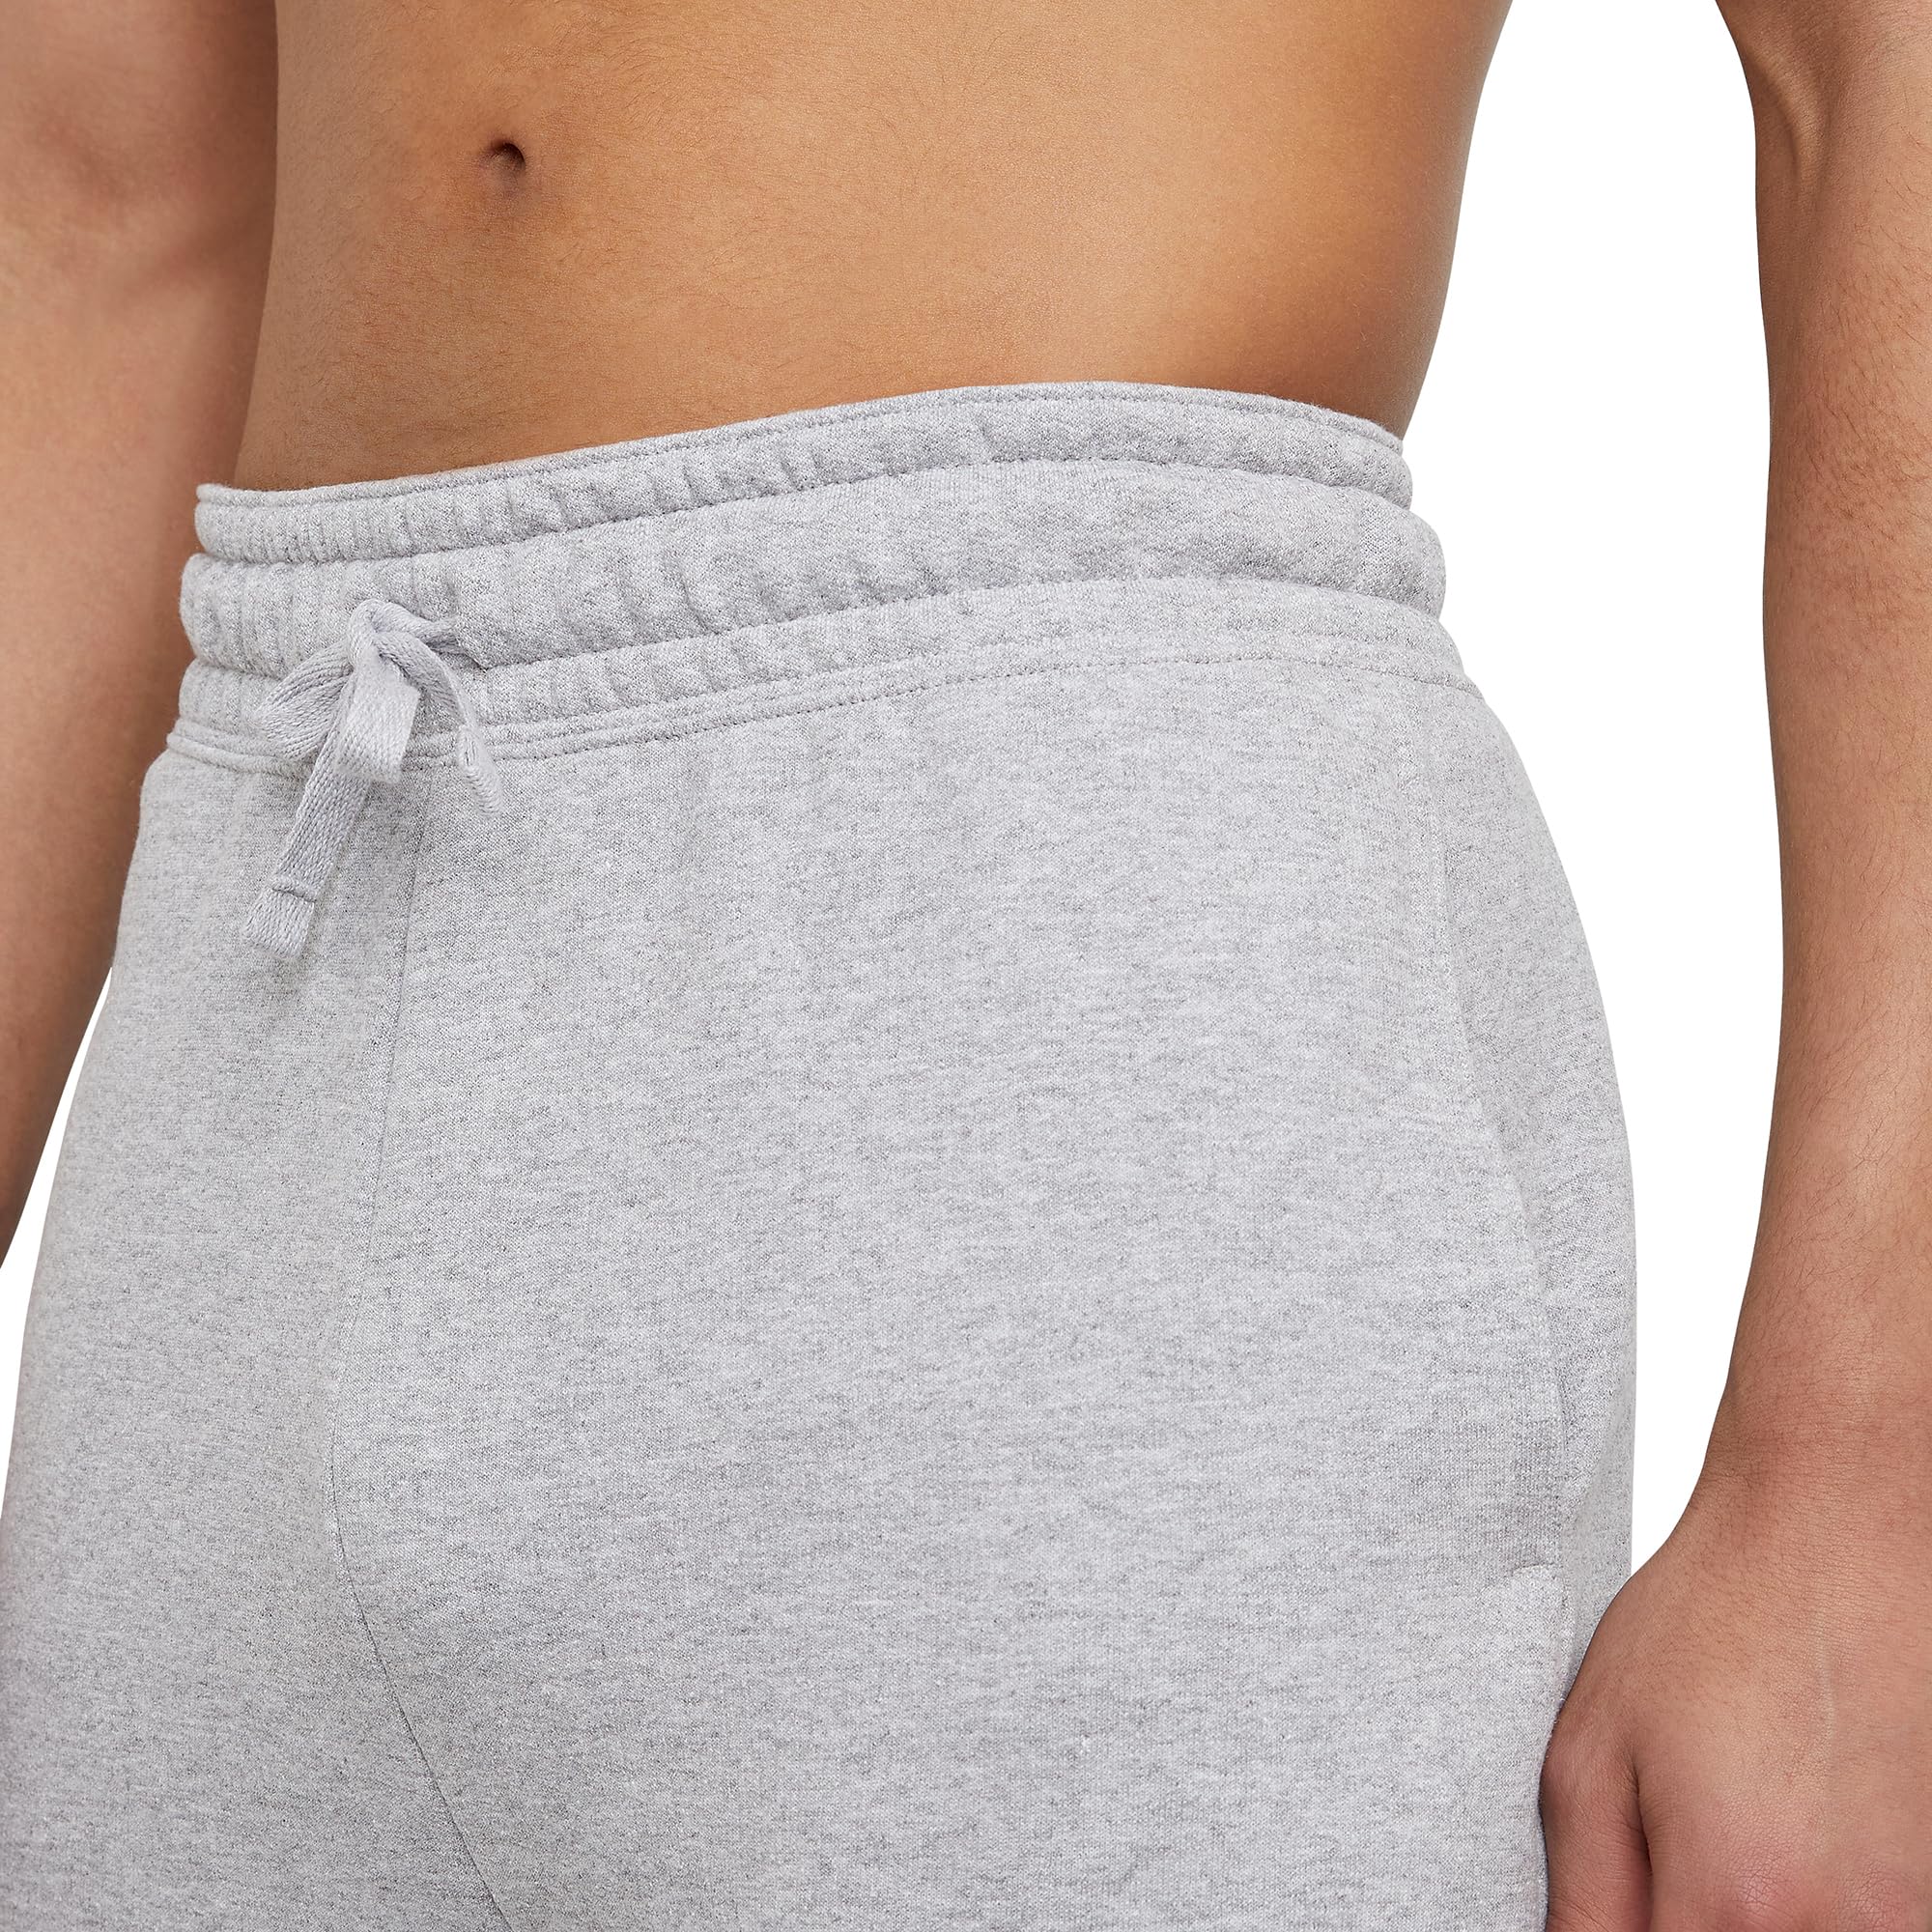 Hanes Men's Jogger Sweatpants, EcoSmart Jogger Sweatpants for Men, Men's Fleece Lounge Pants